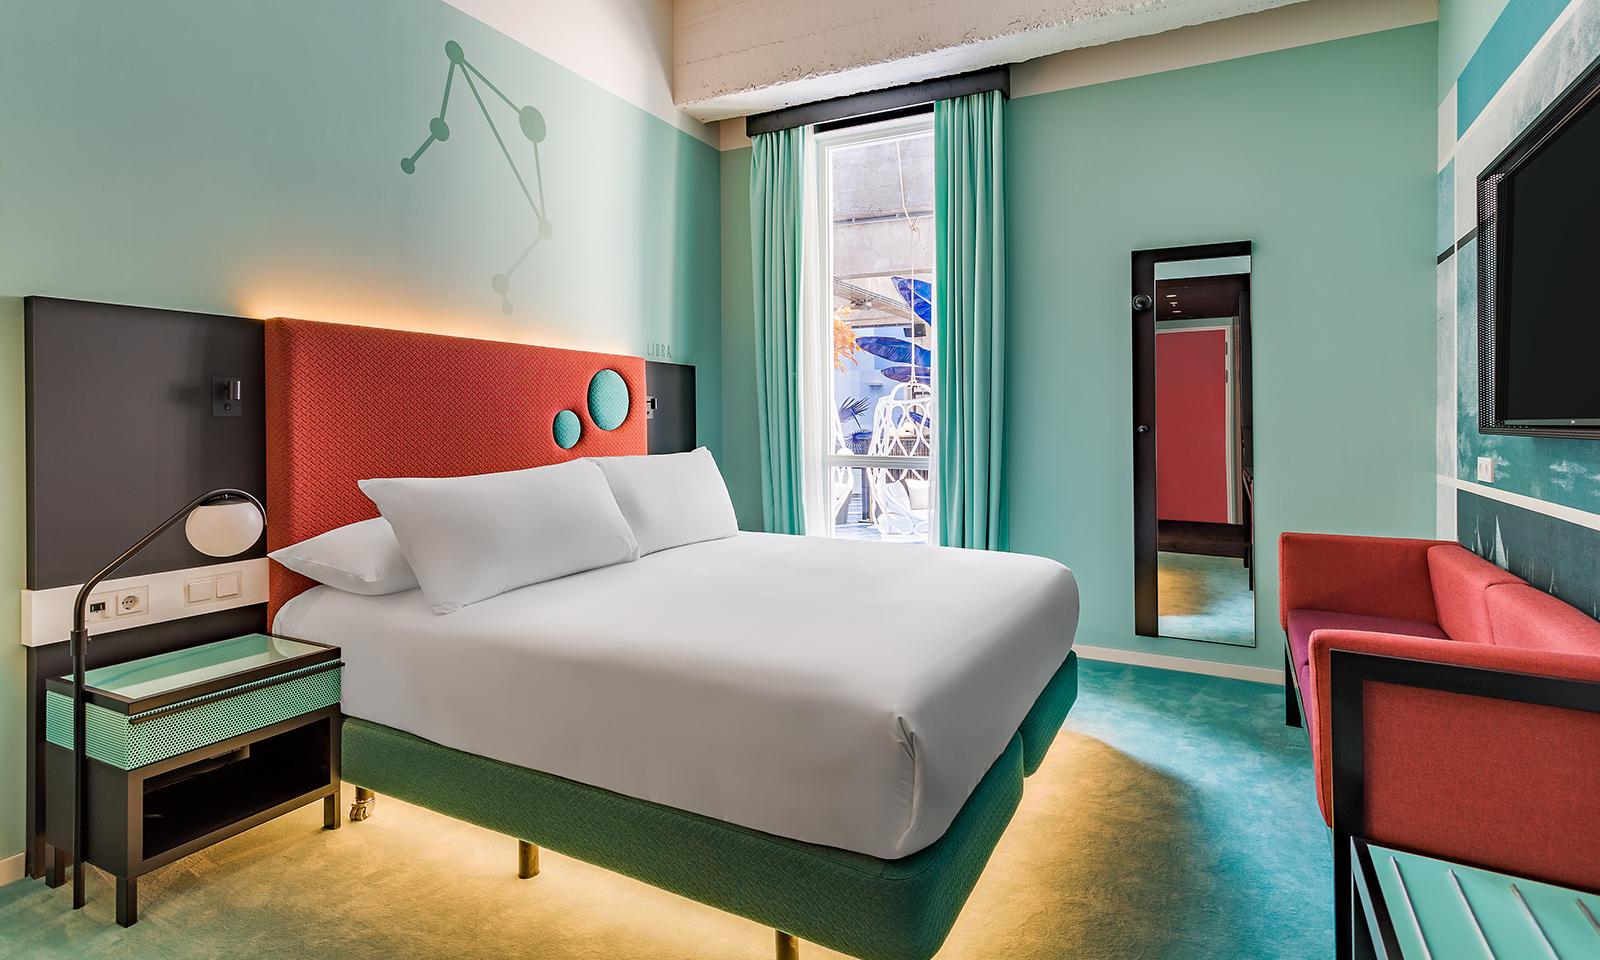 Room Mate Bruno Hotel